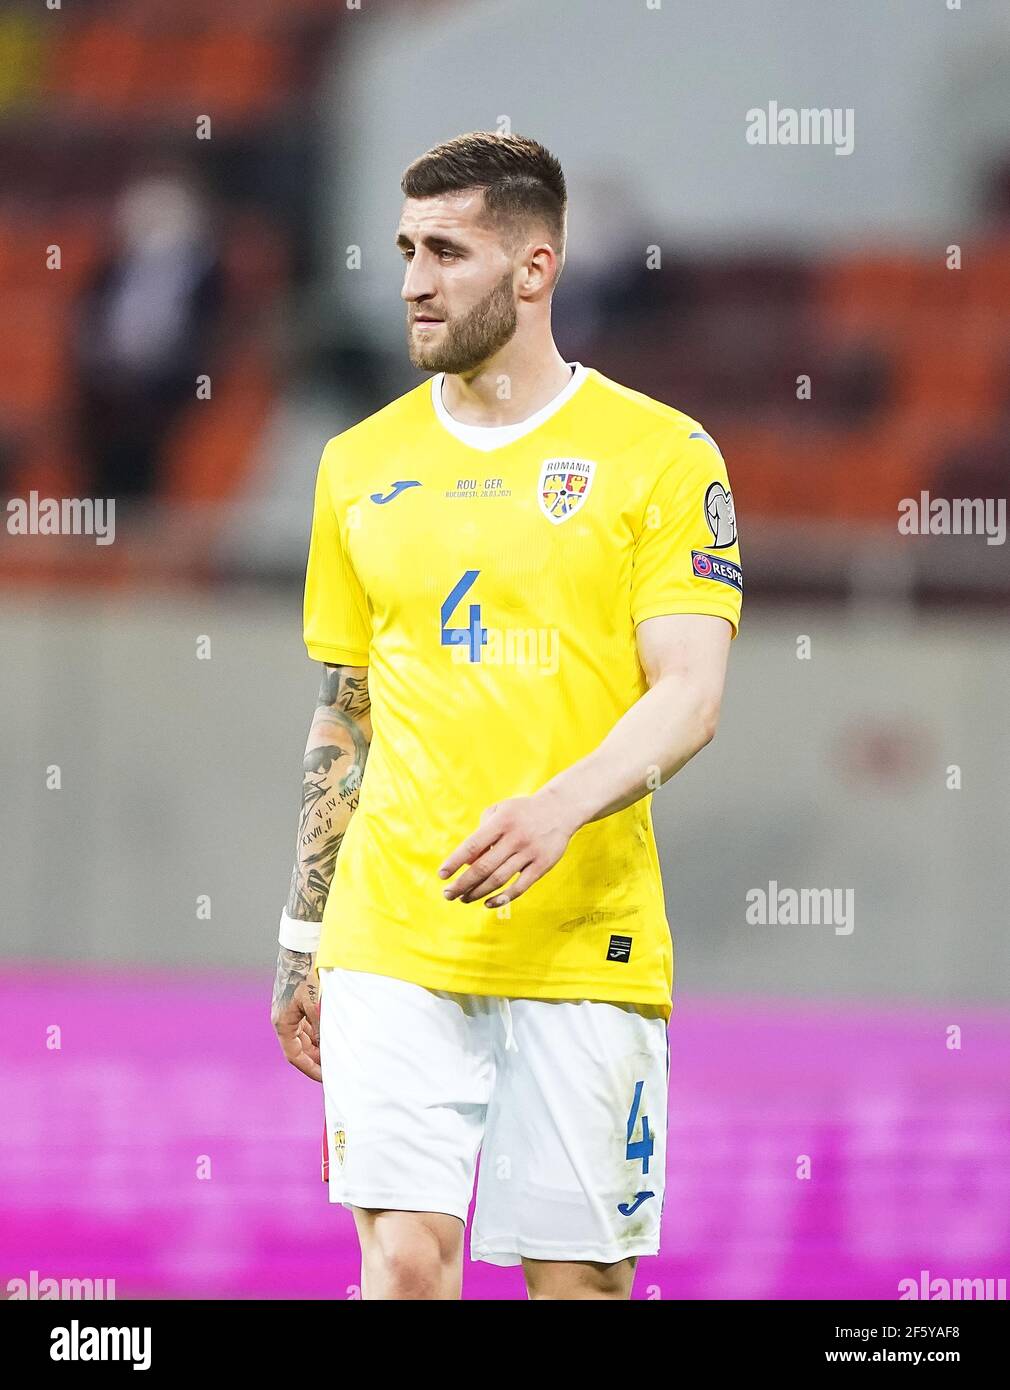 Portrait of Octavian Popescu during Romania Superliga: A.F.C. News Photo  - Getty Images